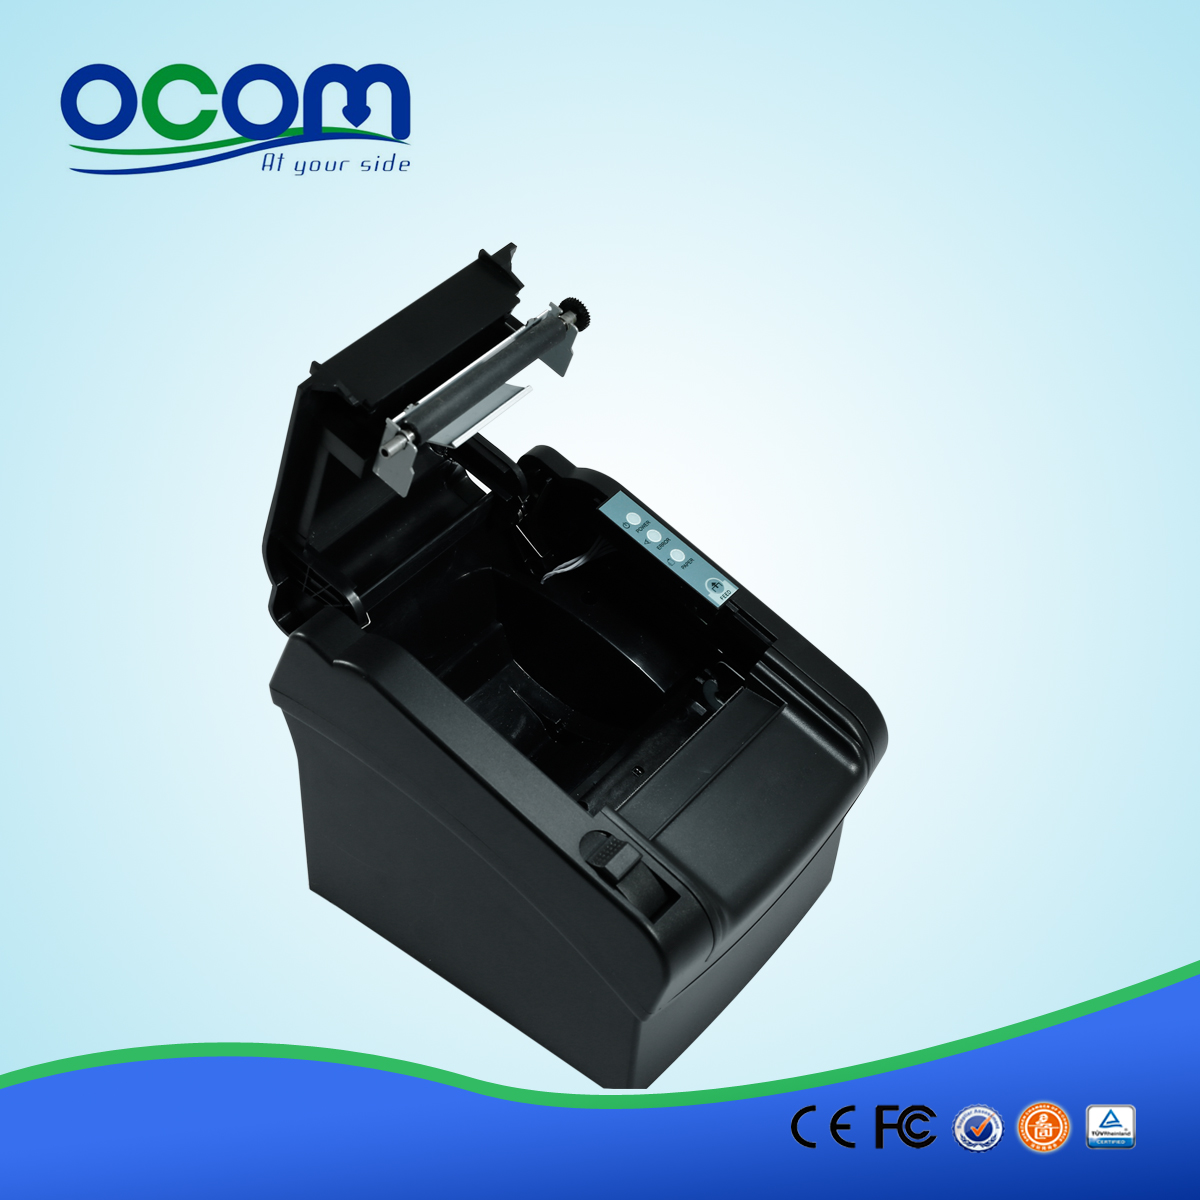 80mm thermal printer thermal barcode printer price (OCPP-802)